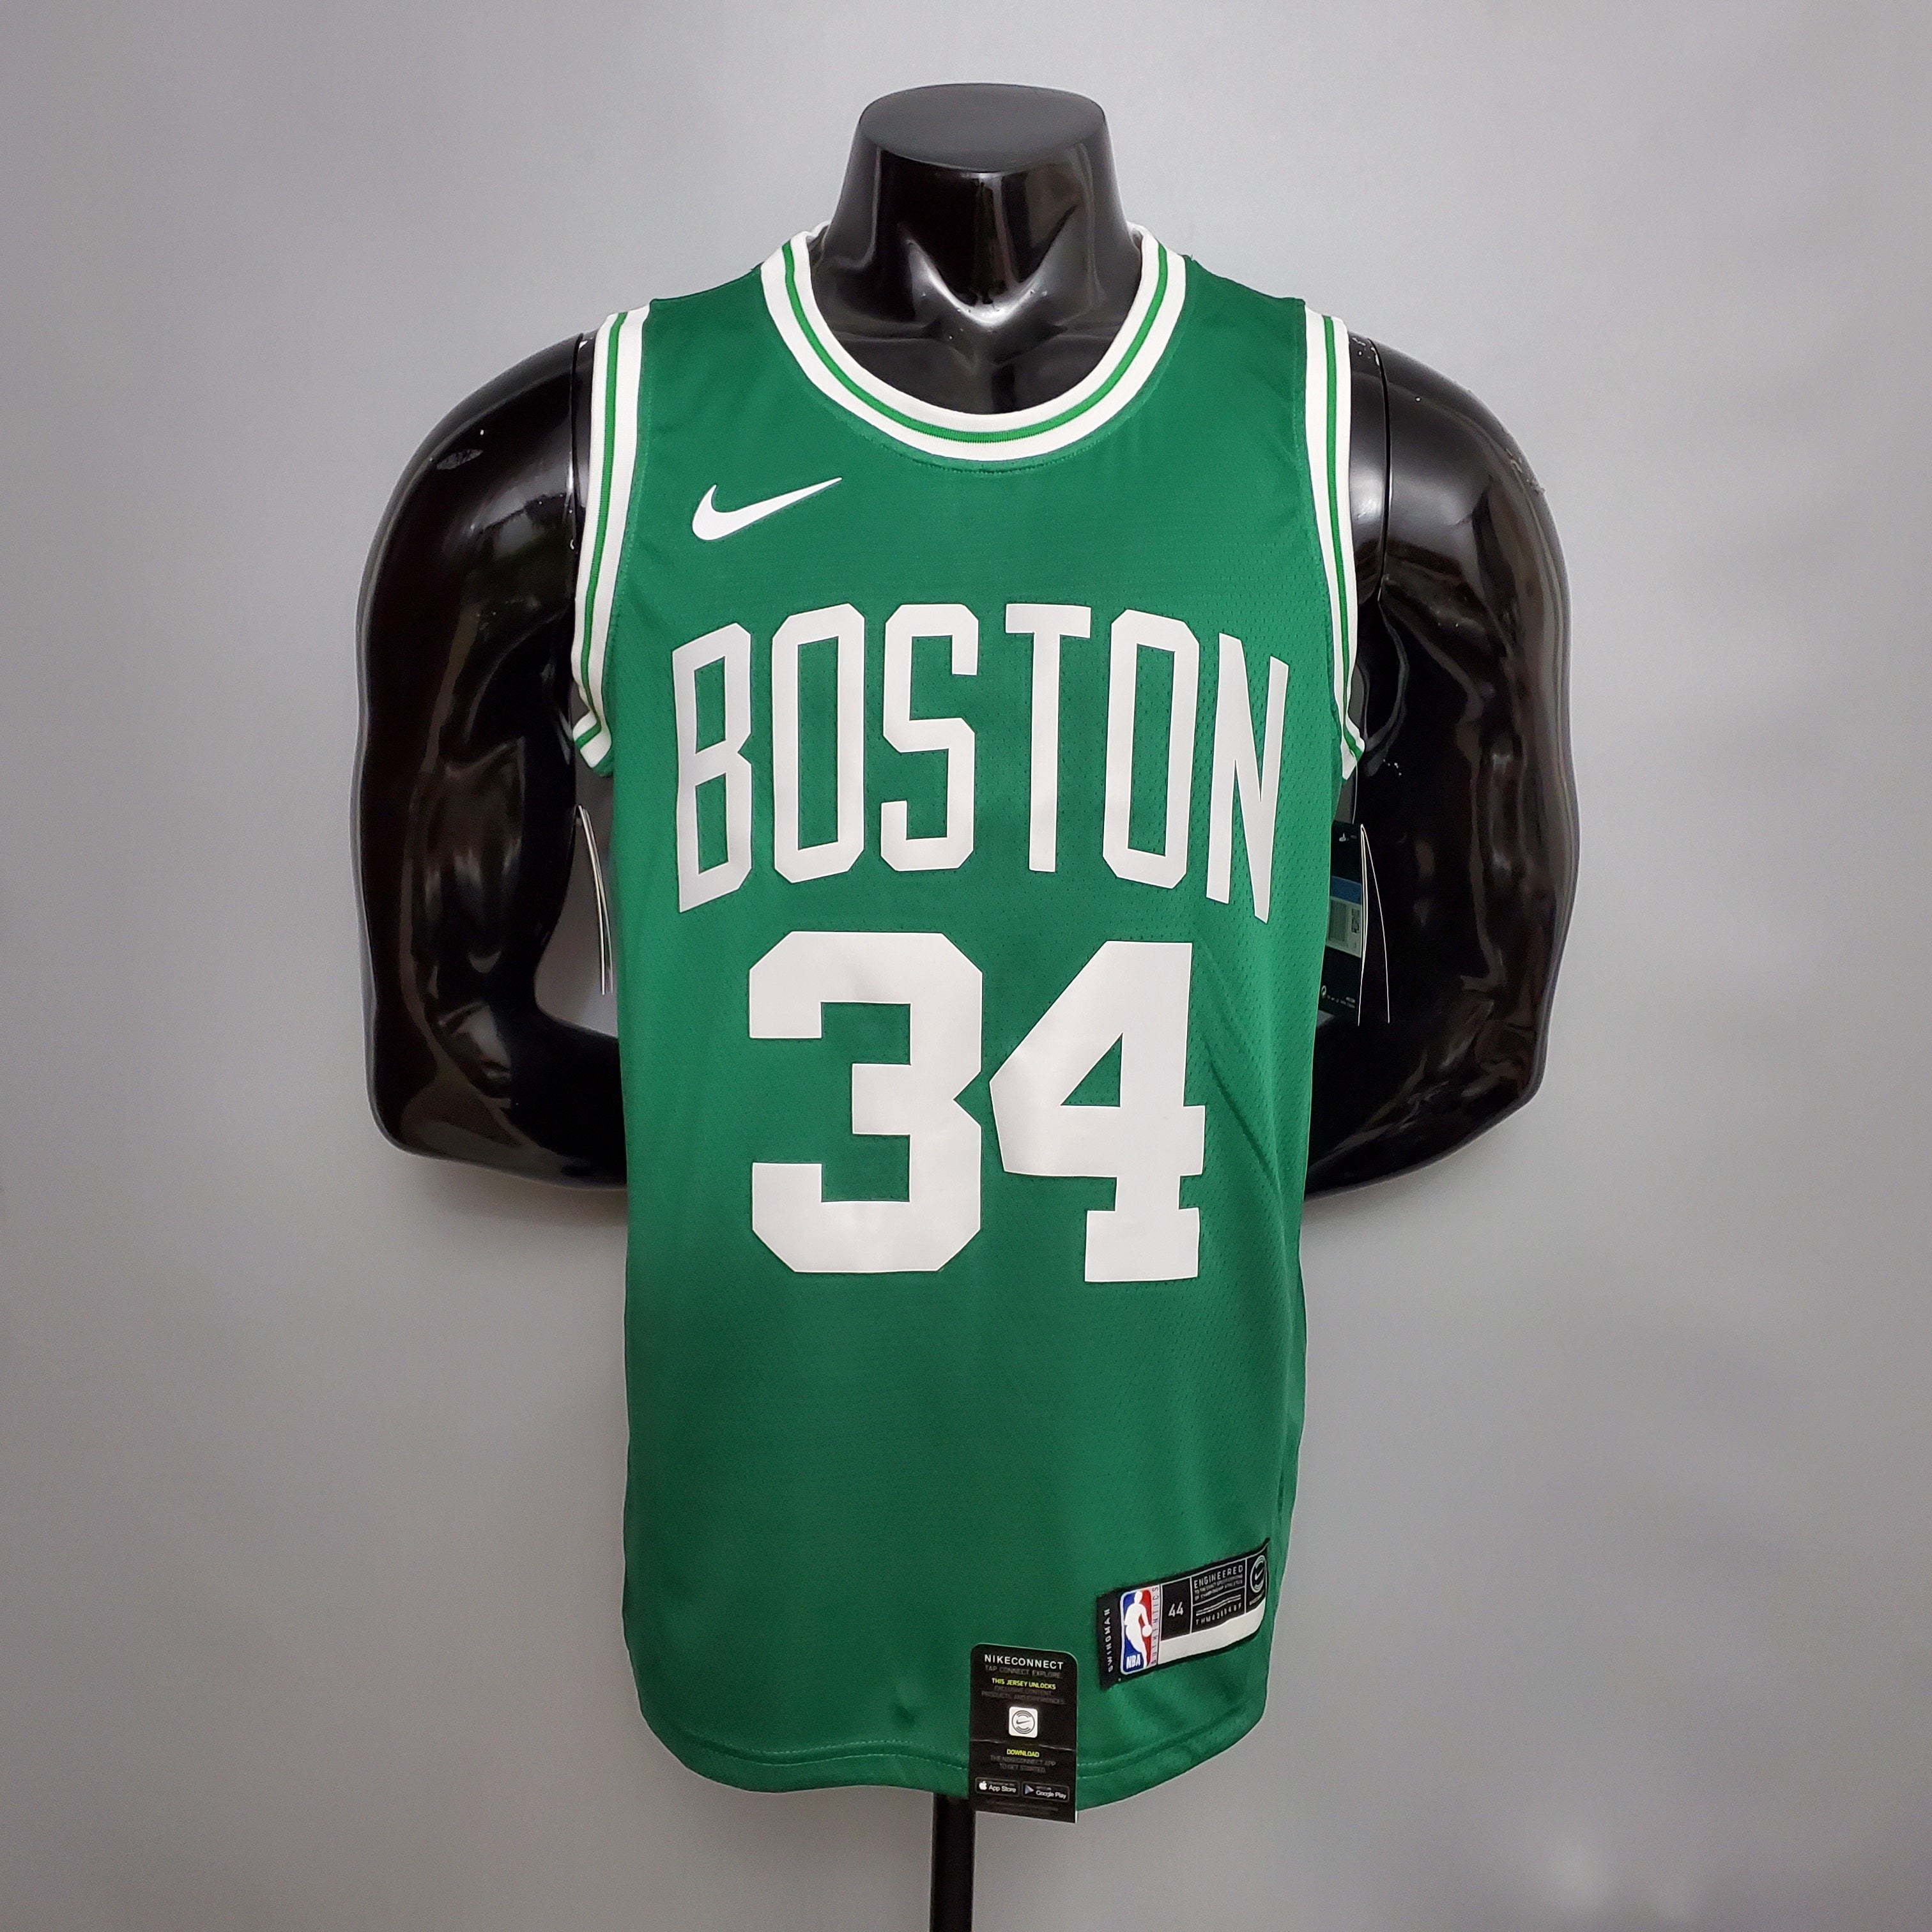 Boston Celtics NBA Jersey - Maxi Kits